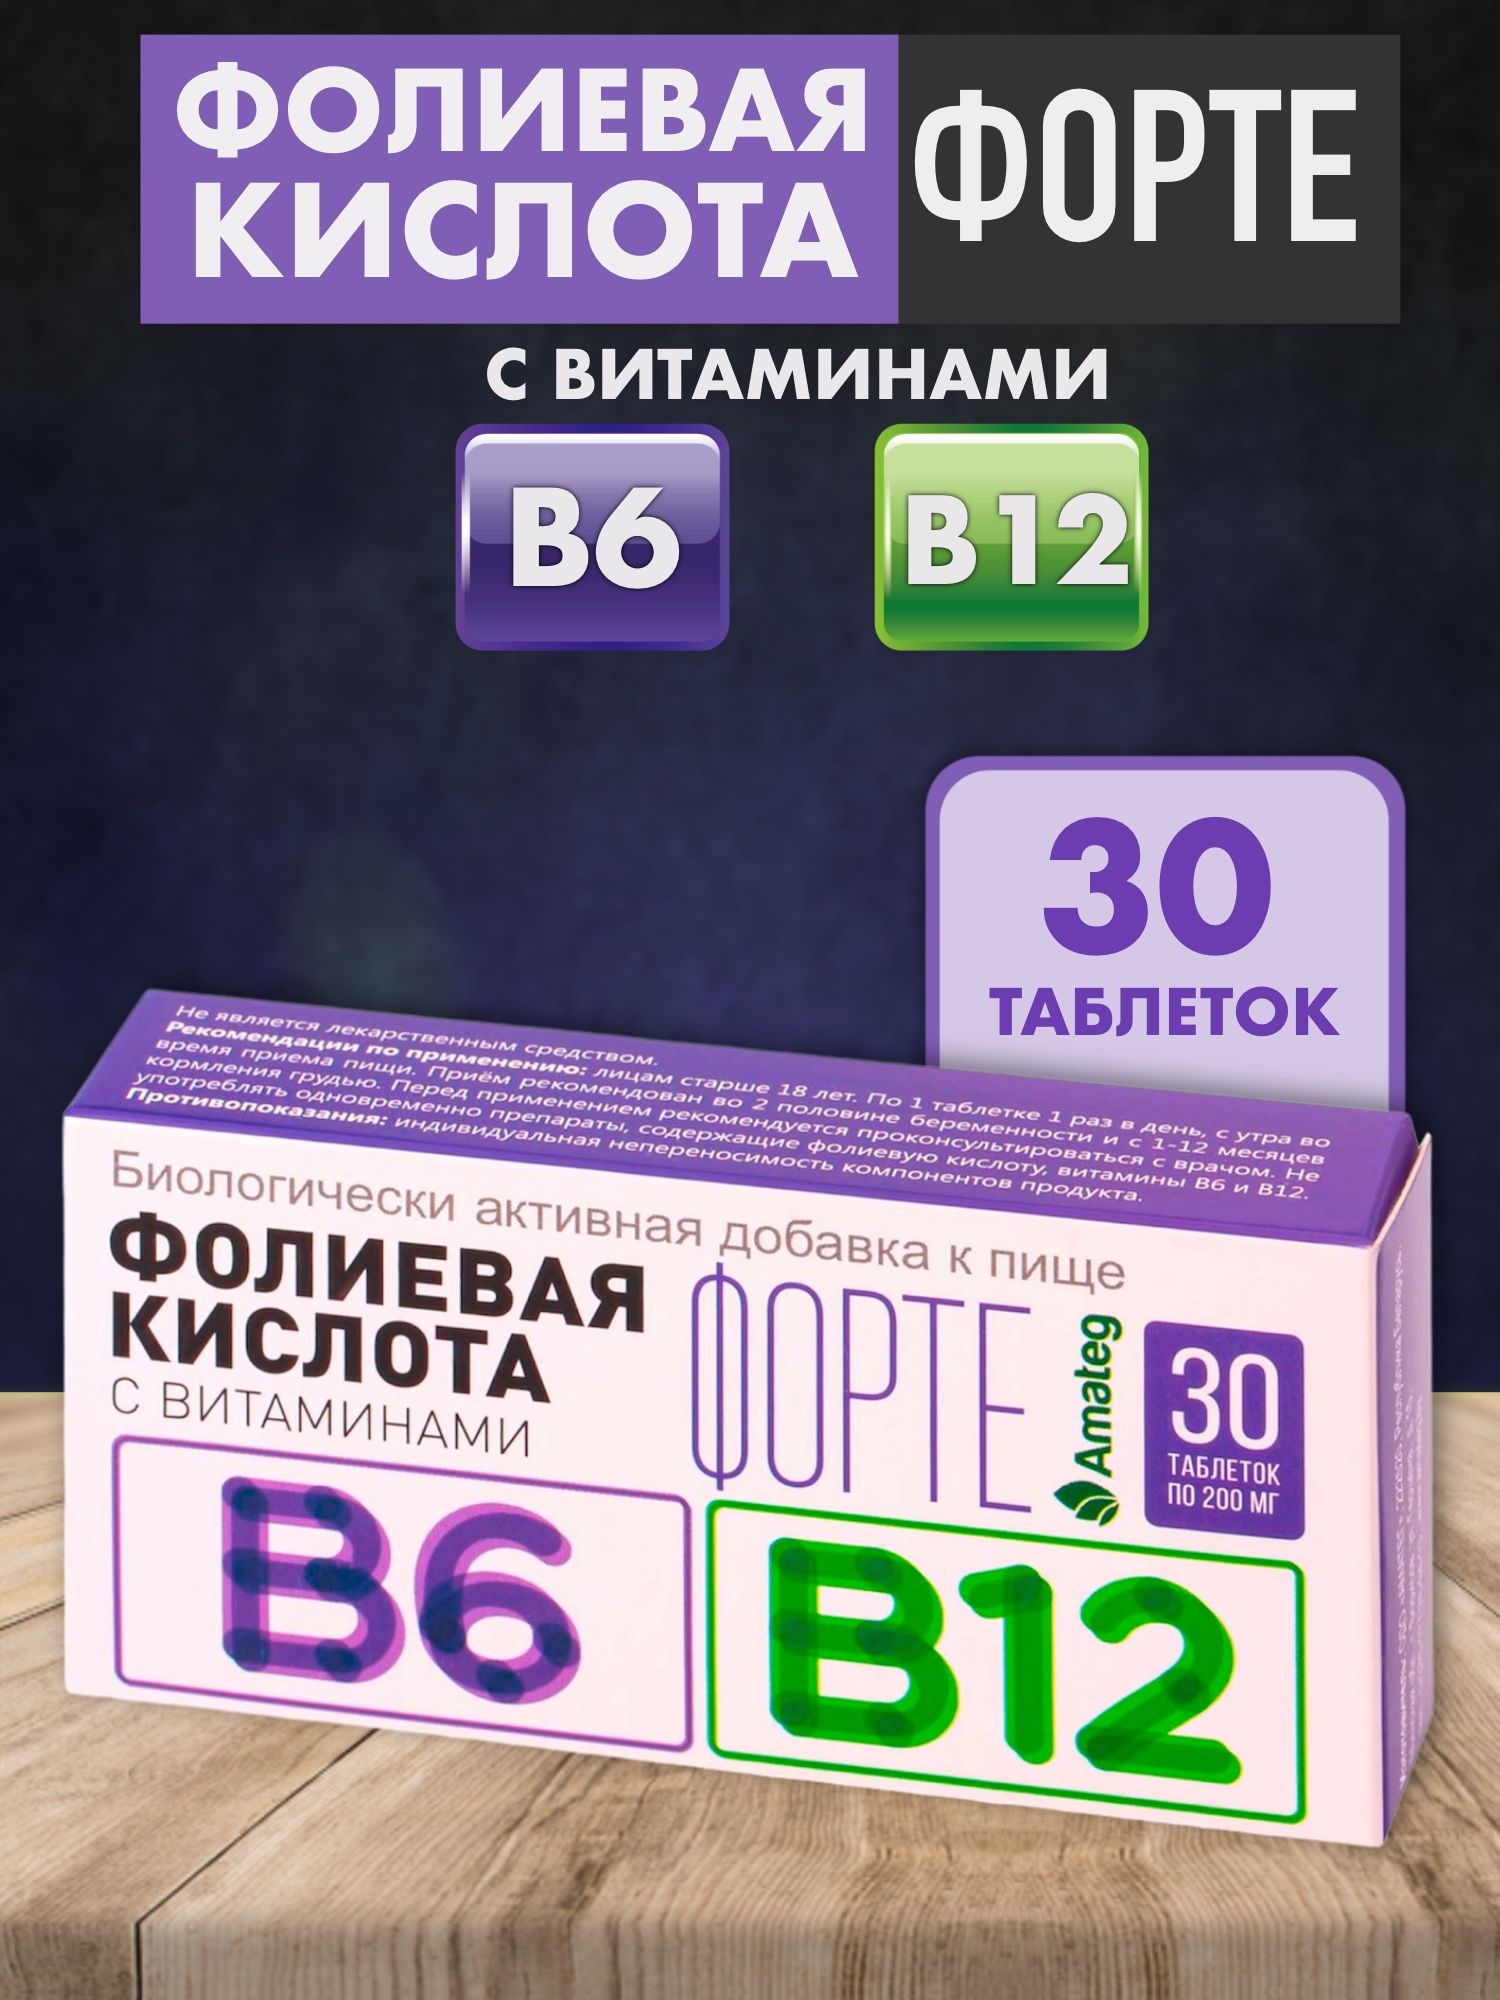 ФолиеваякислотафортесвитаминамиB6иB12Аматег,таблетки200мг,№30